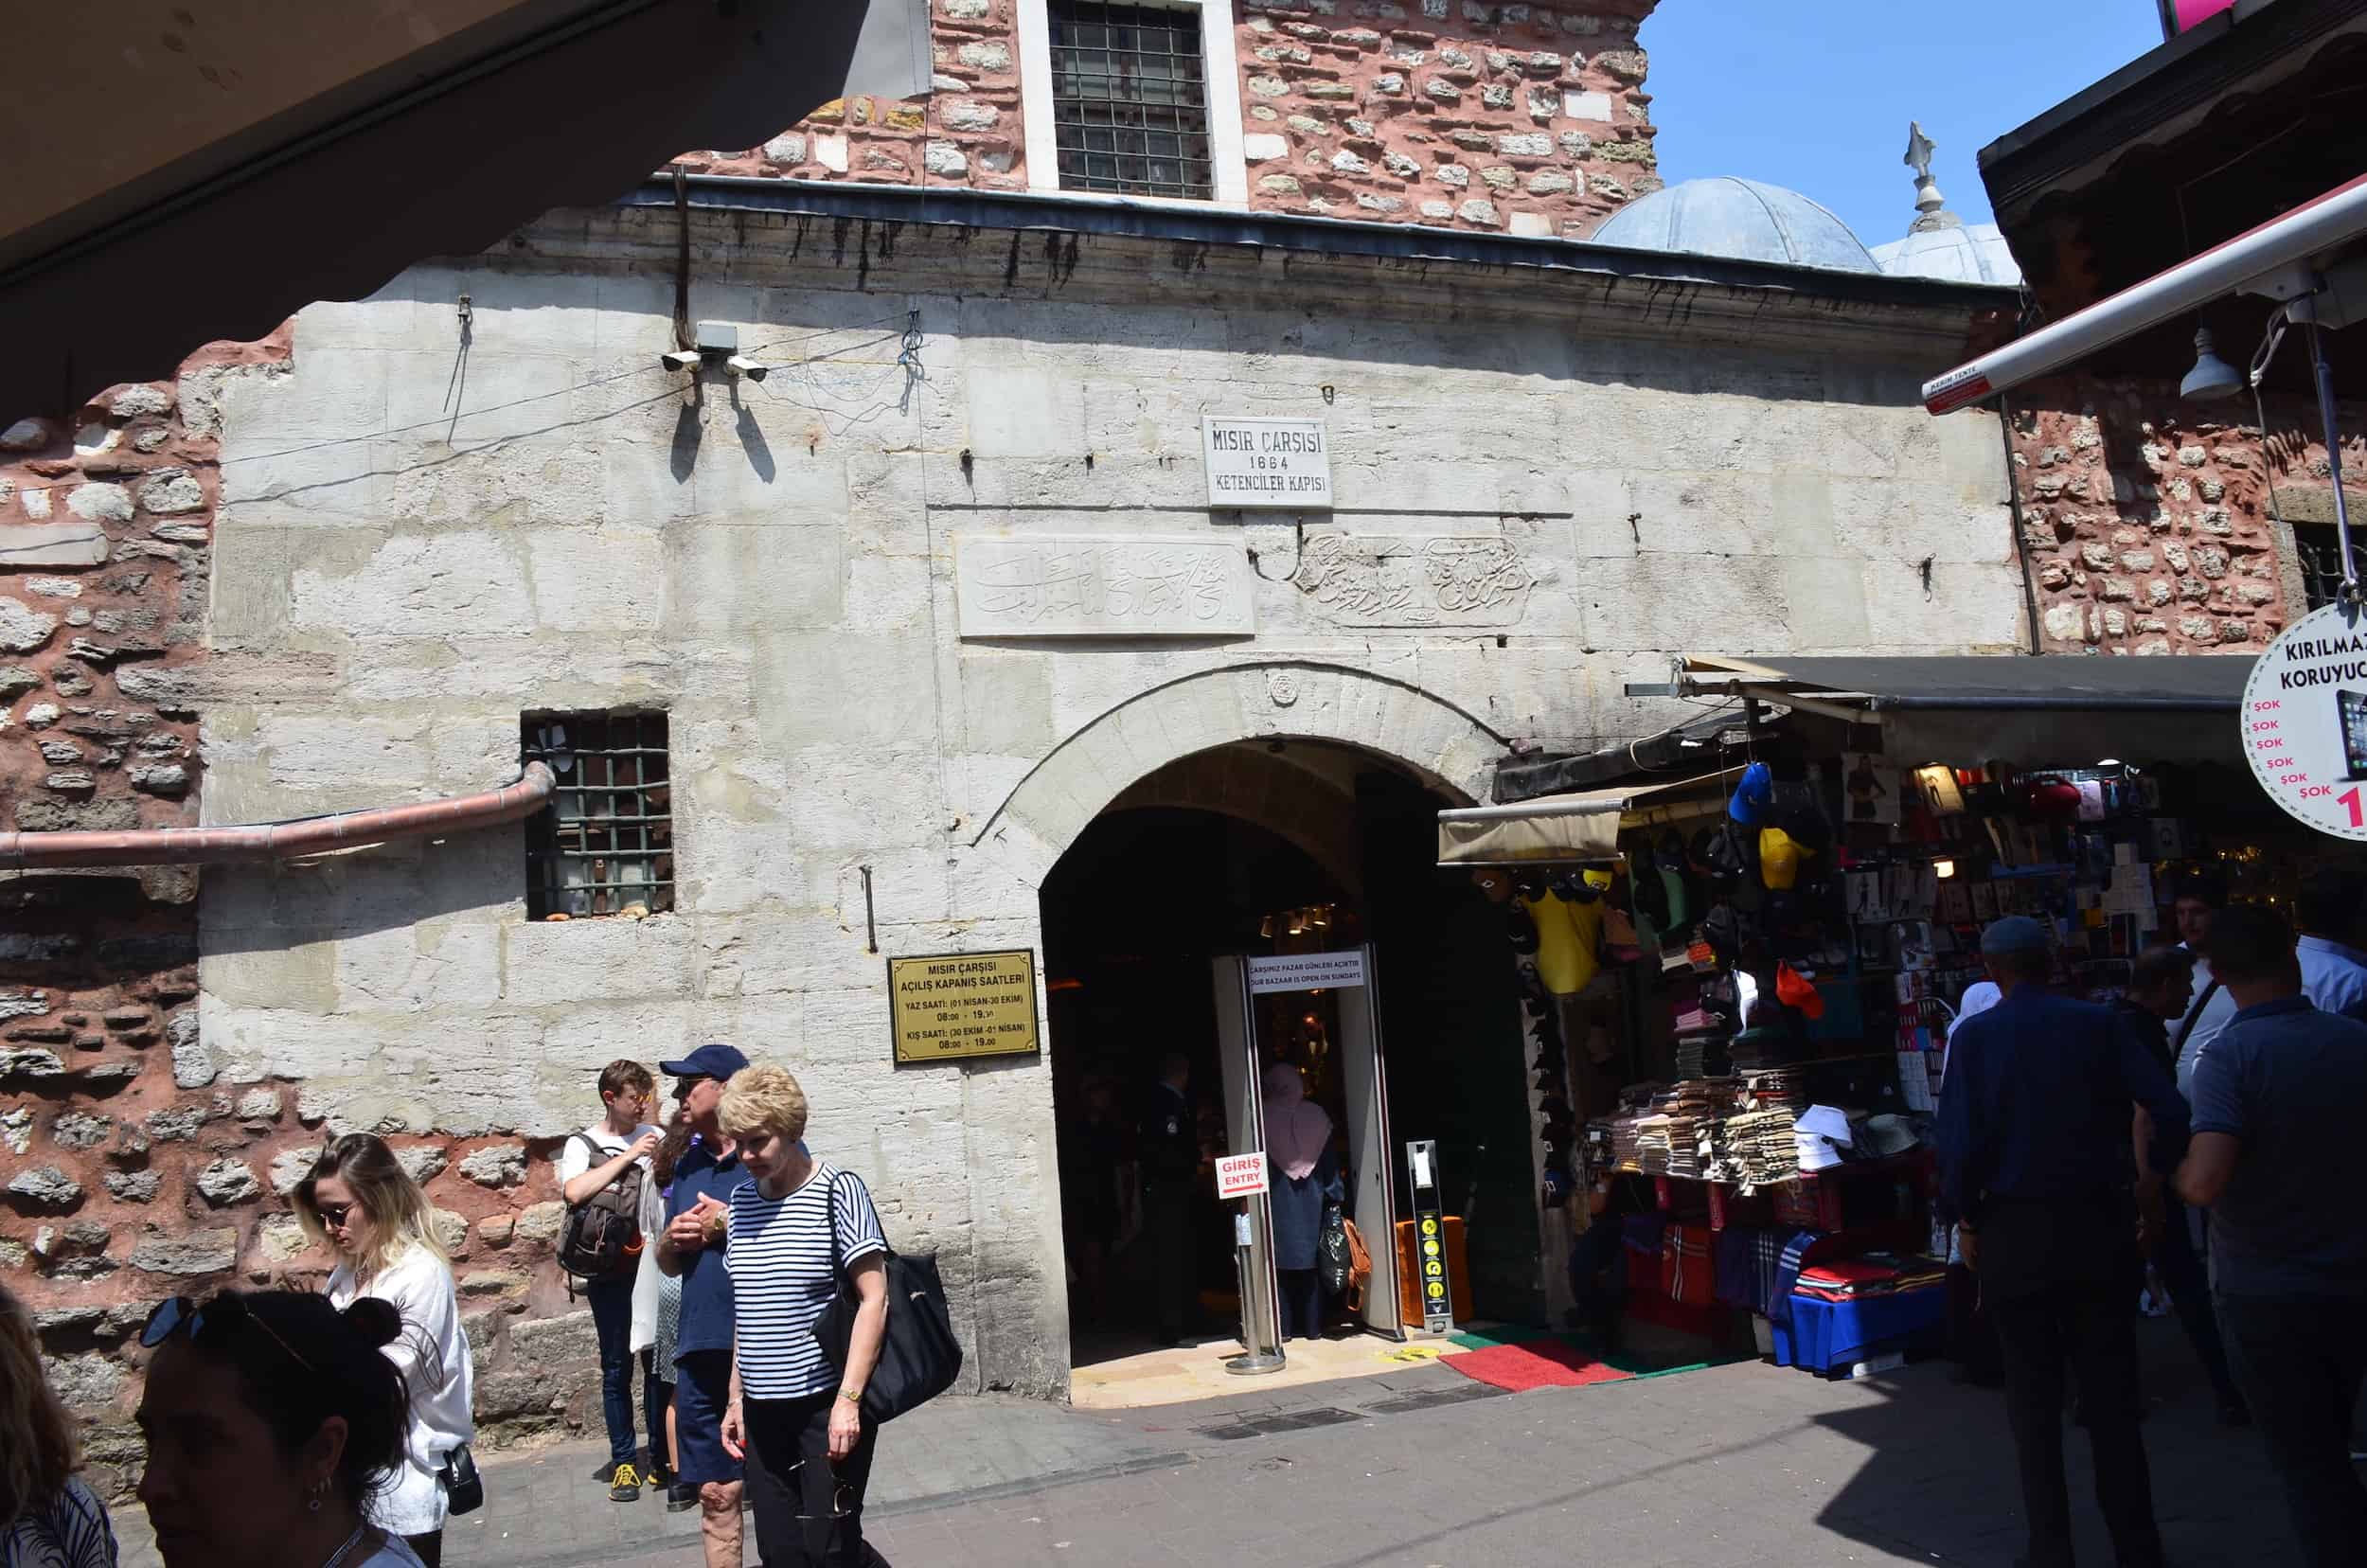 Ketenciler Gate of the Spice Bazaar in Istanbul, Turkey